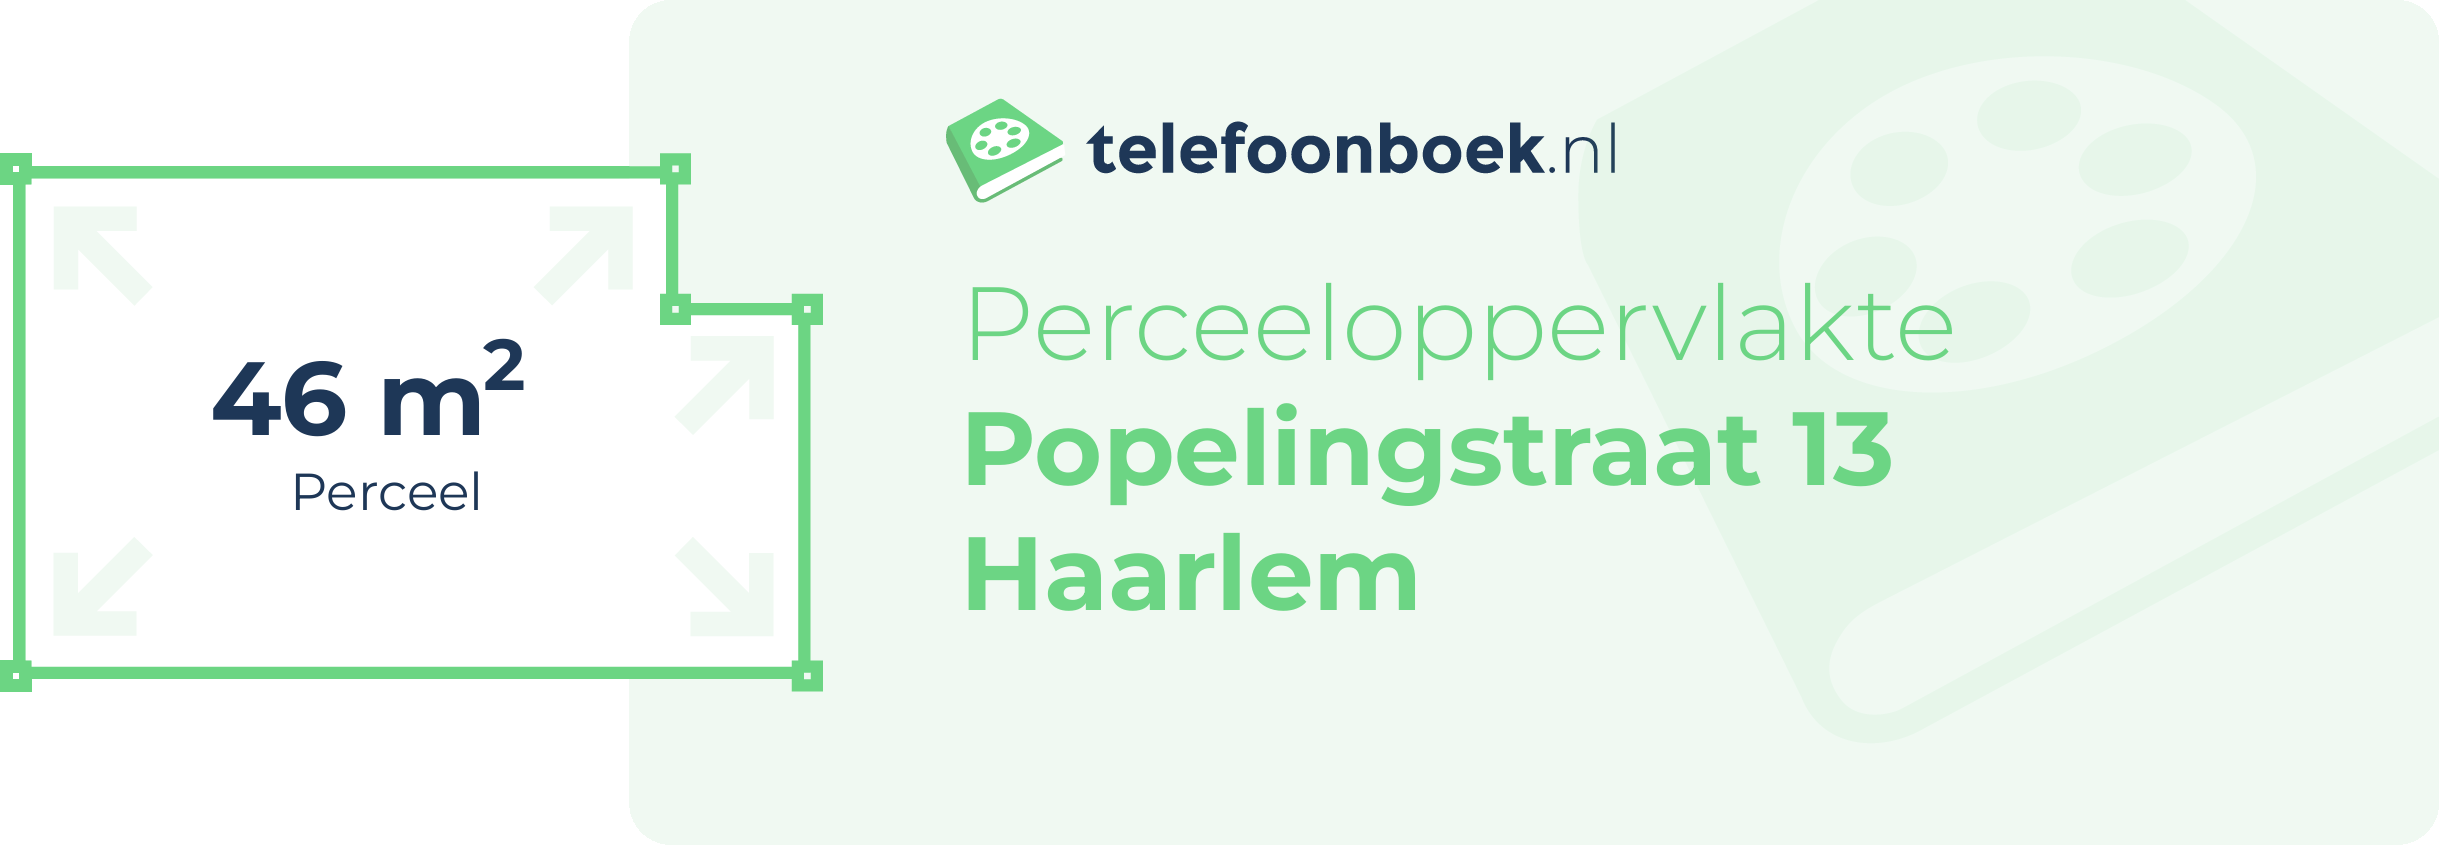 Perceeloppervlakte Popelingstraat 13 Haarlem